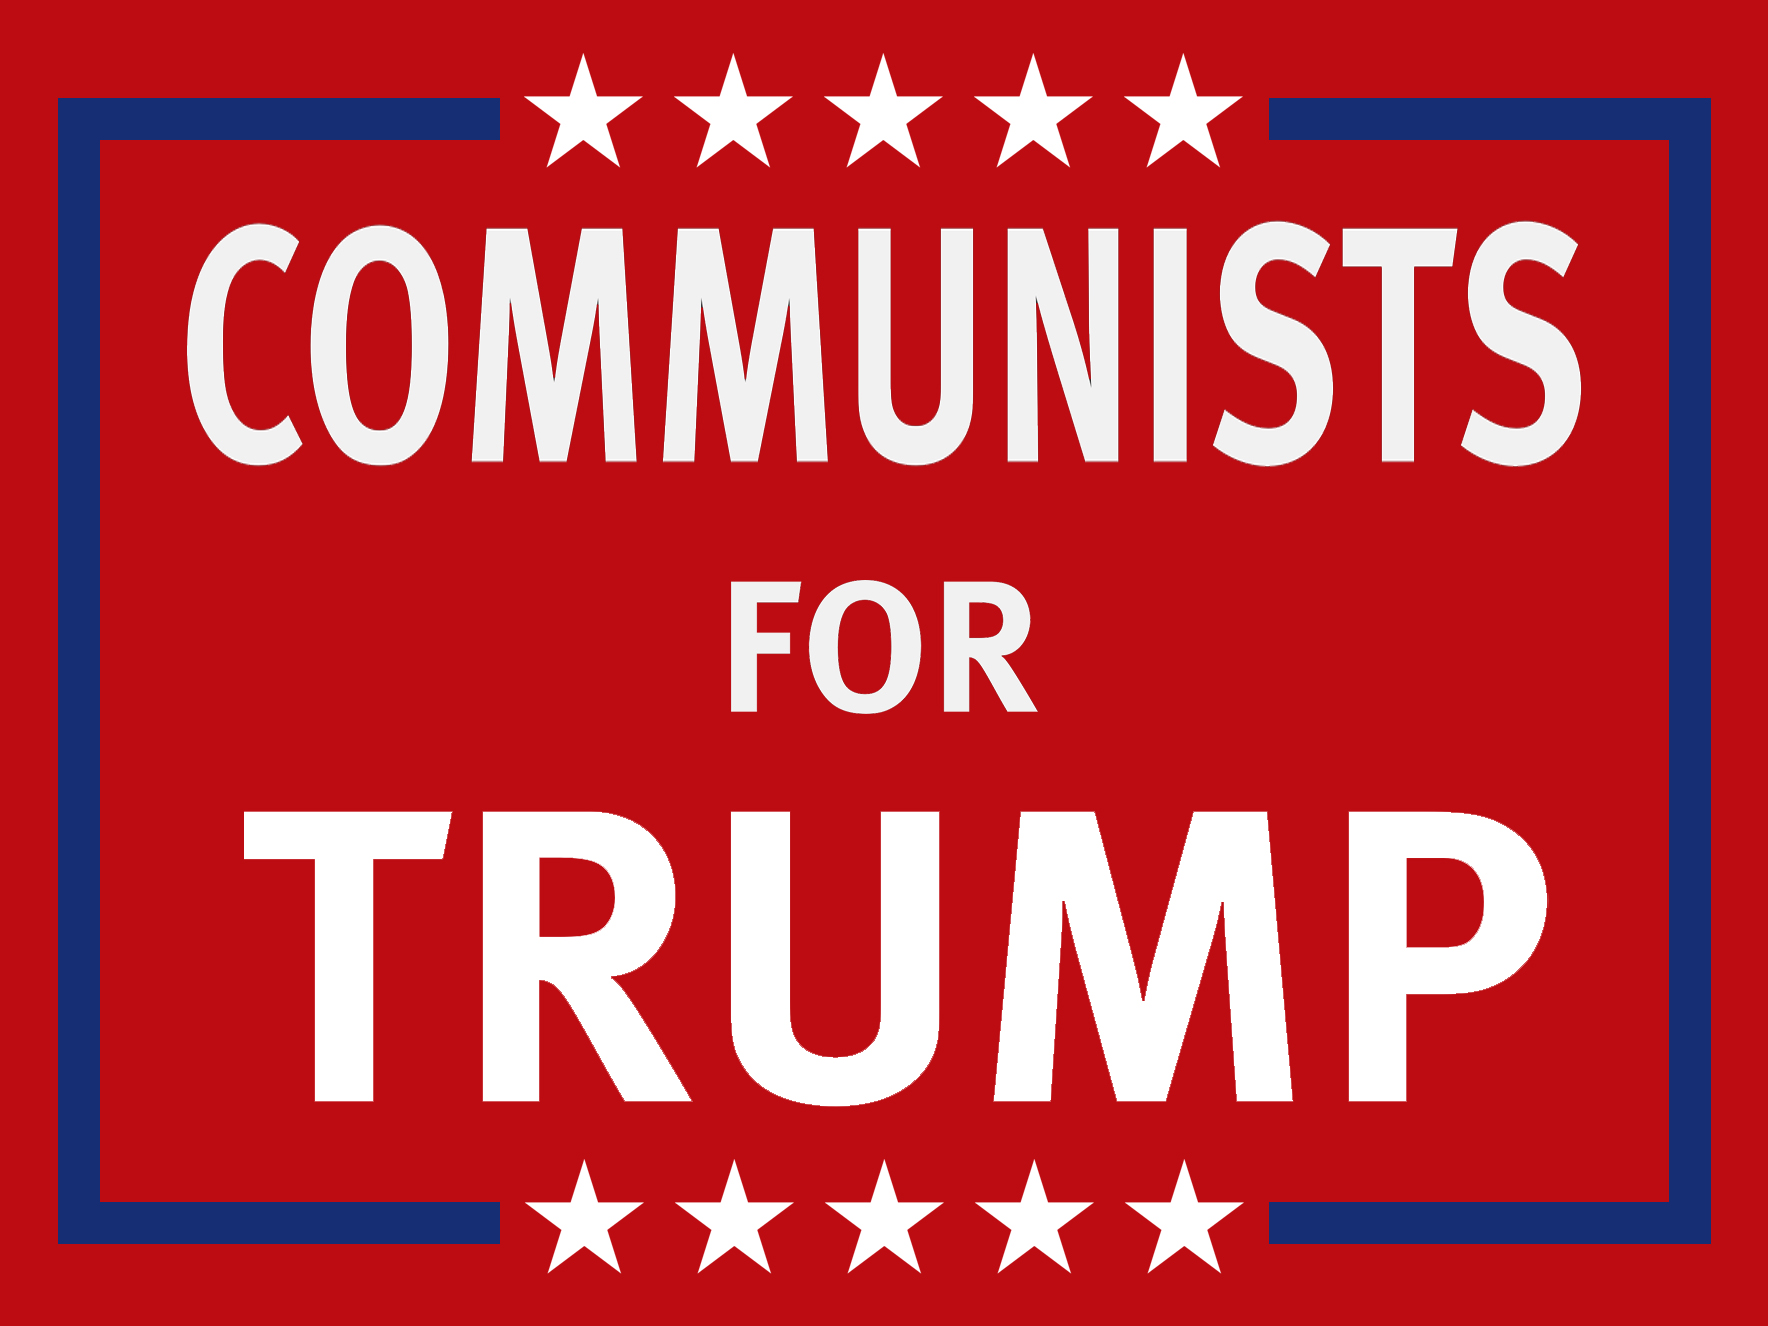 Communists for trump image.jpg